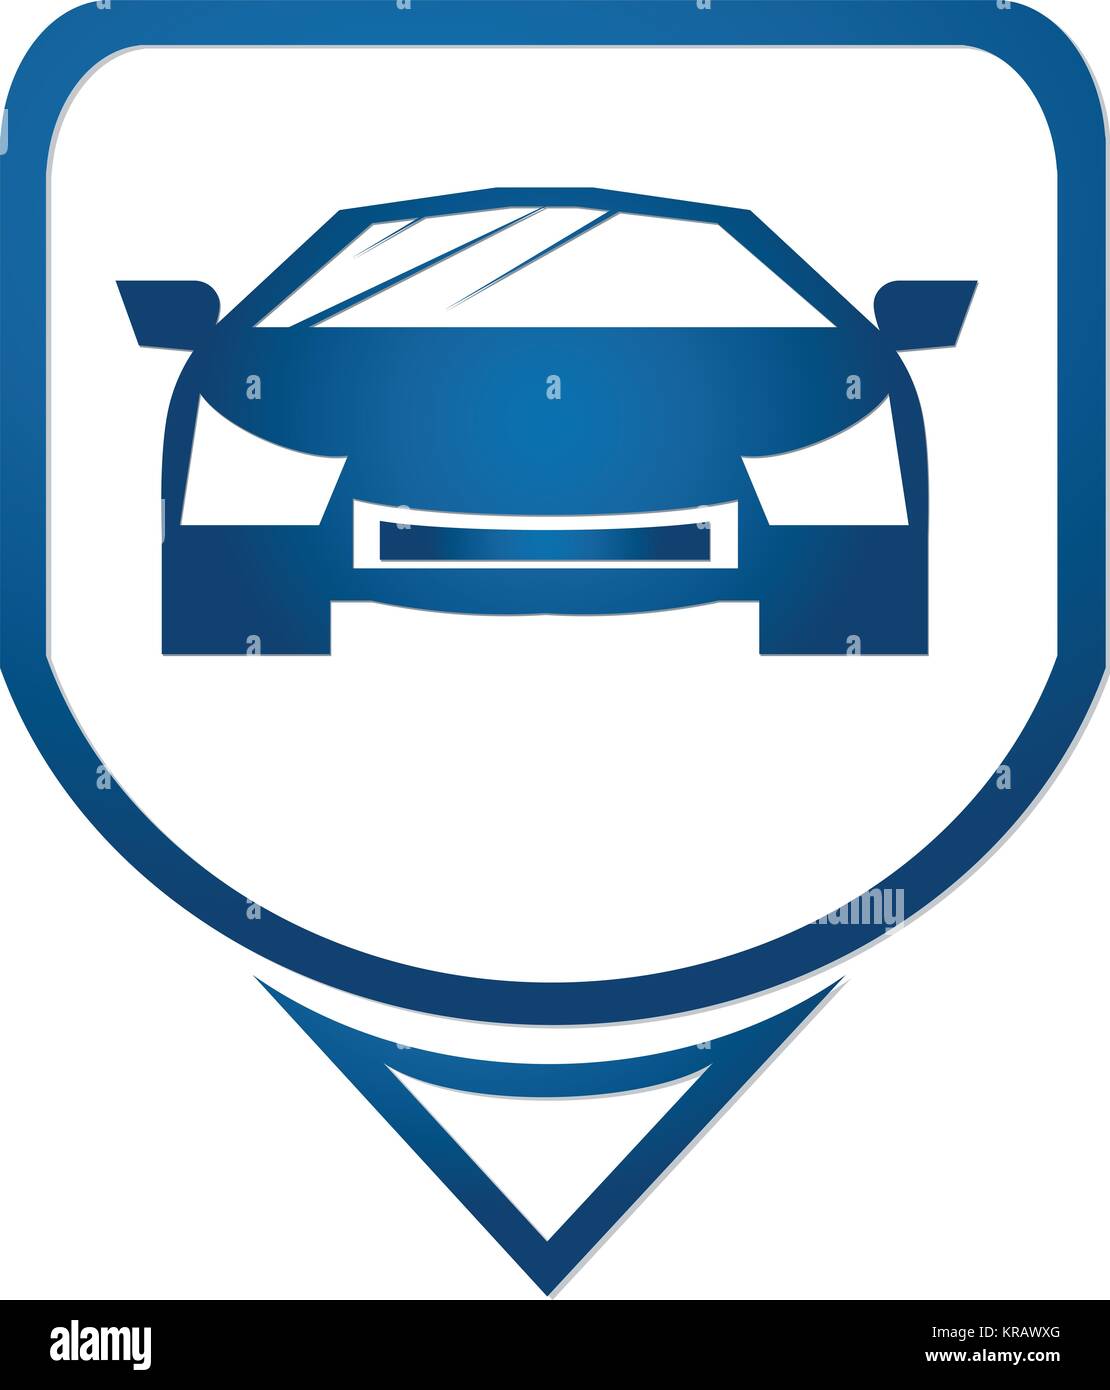 fast car icon symbols Stock Photo